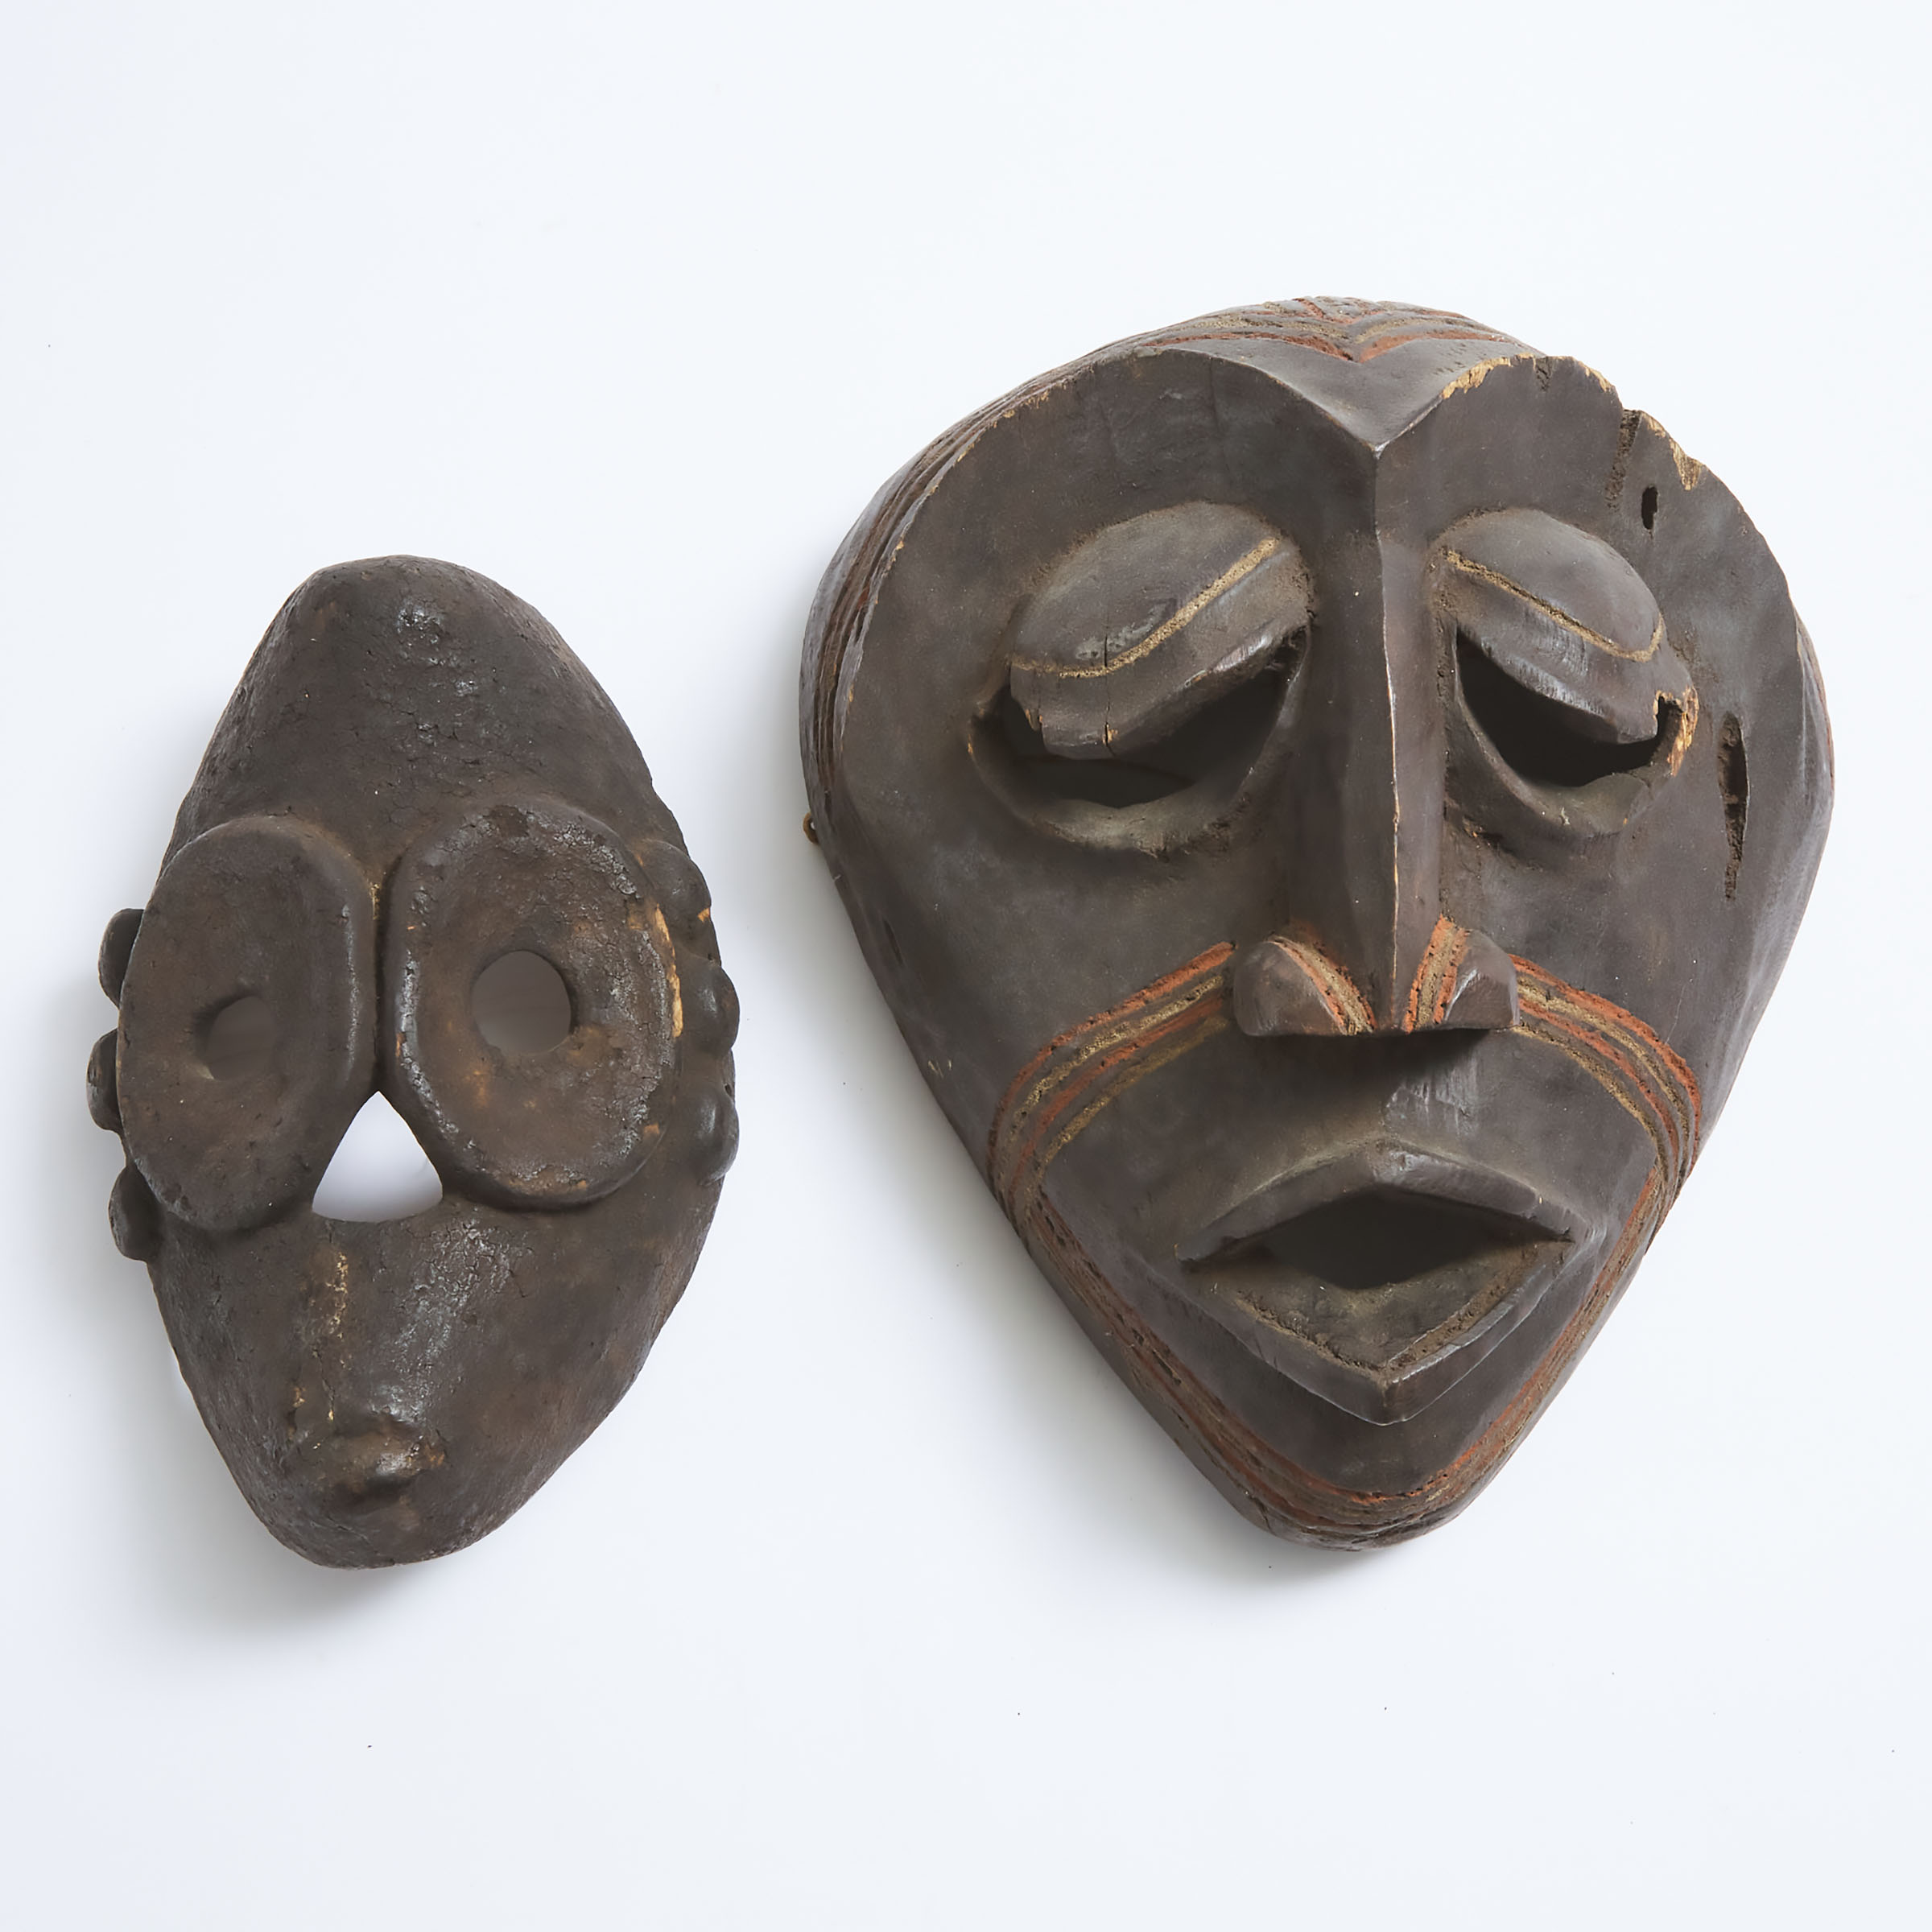 Unidentified African Mask possibly 3aadaa